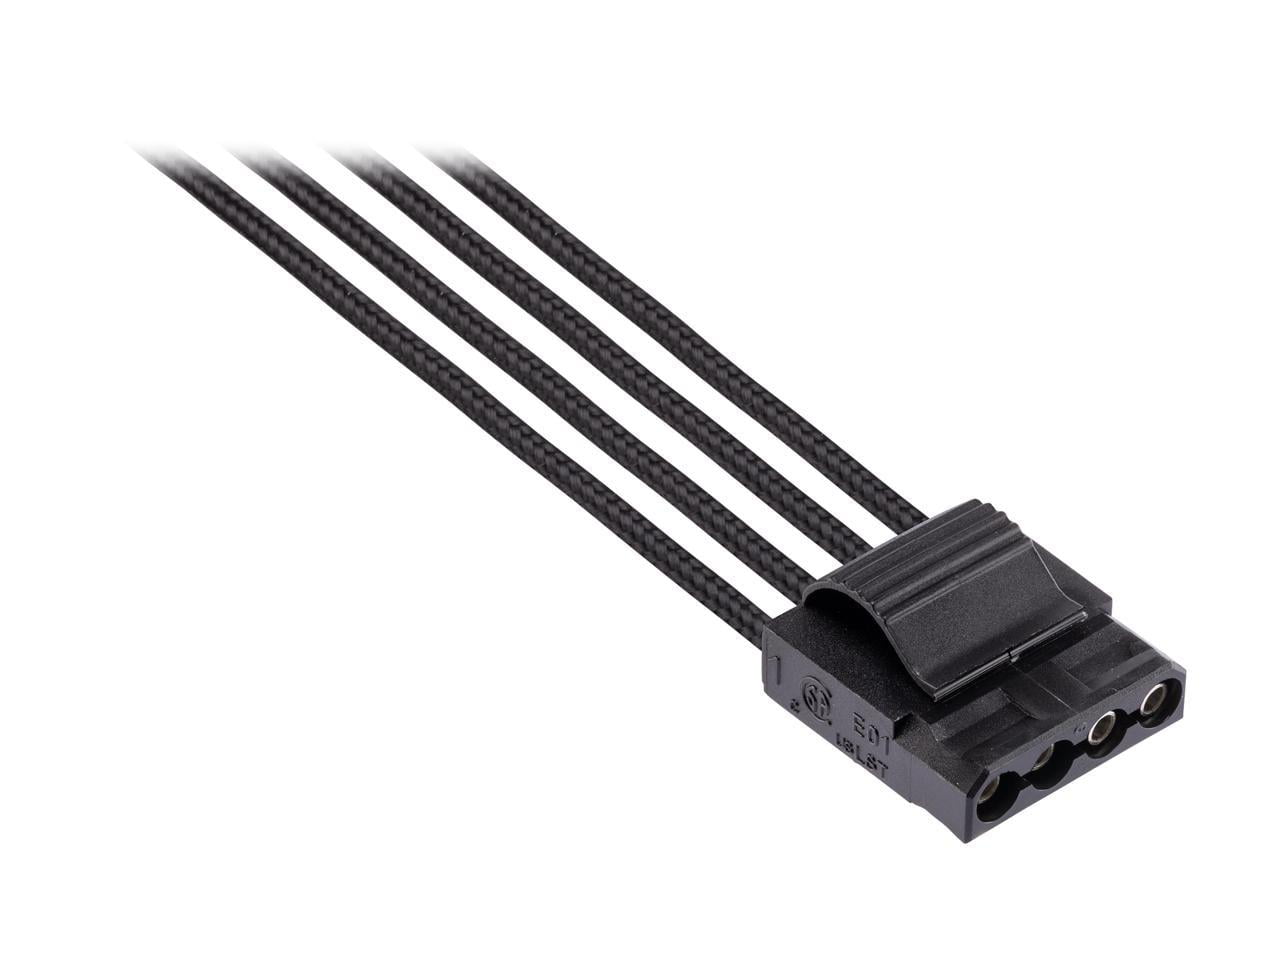 PSU CP-8920222 Cables Individually Gen Corsair Sleeved 4 Type Premium Pro Kit 4 - Black